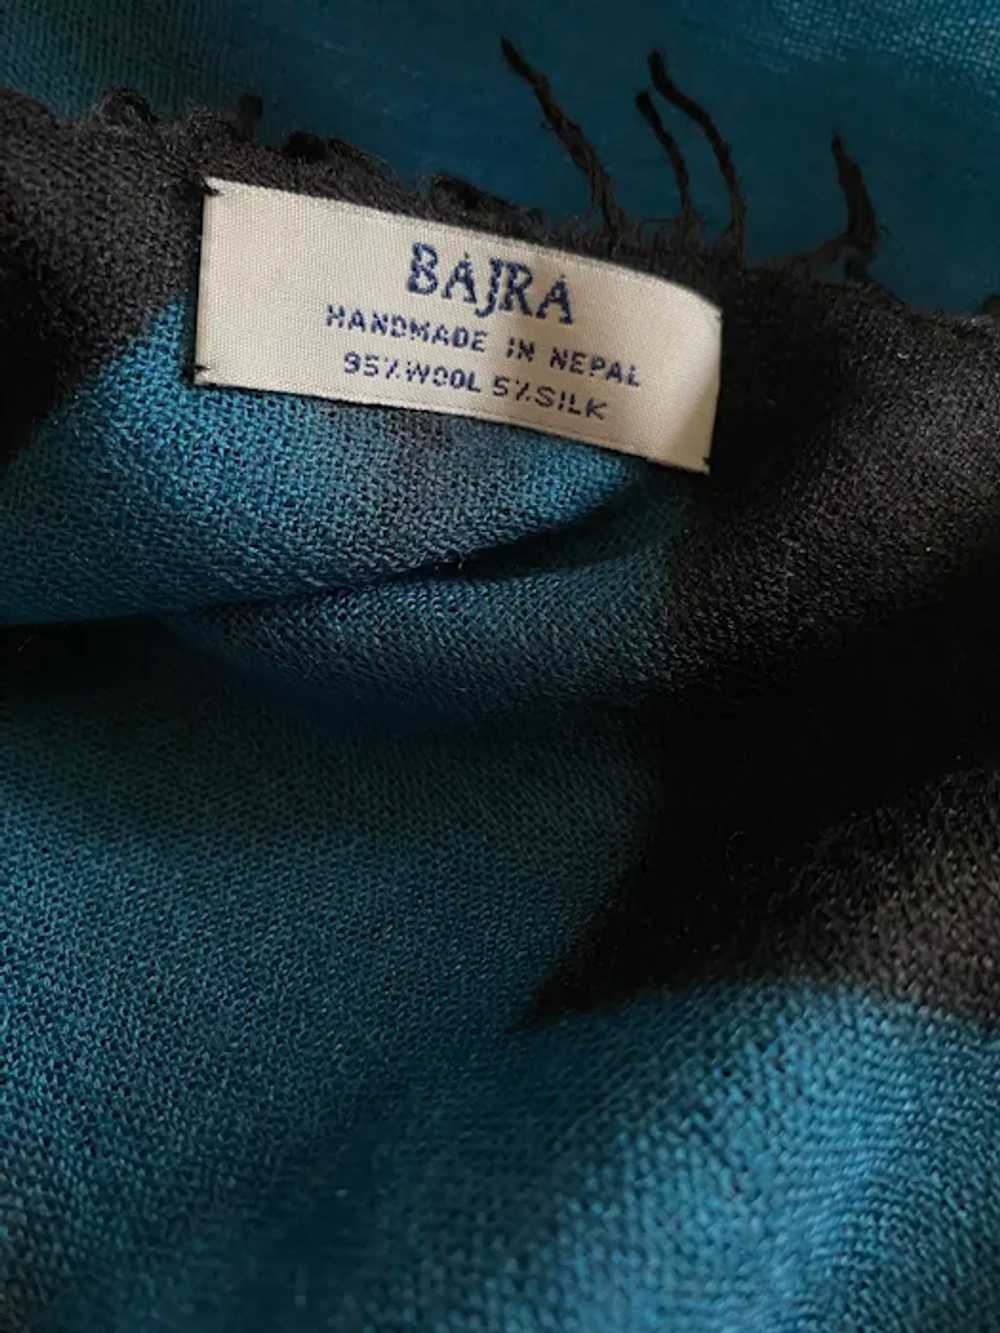 Handmade Bajra  Nepal Wool & Silk & Wrap / Scarf … - image 5